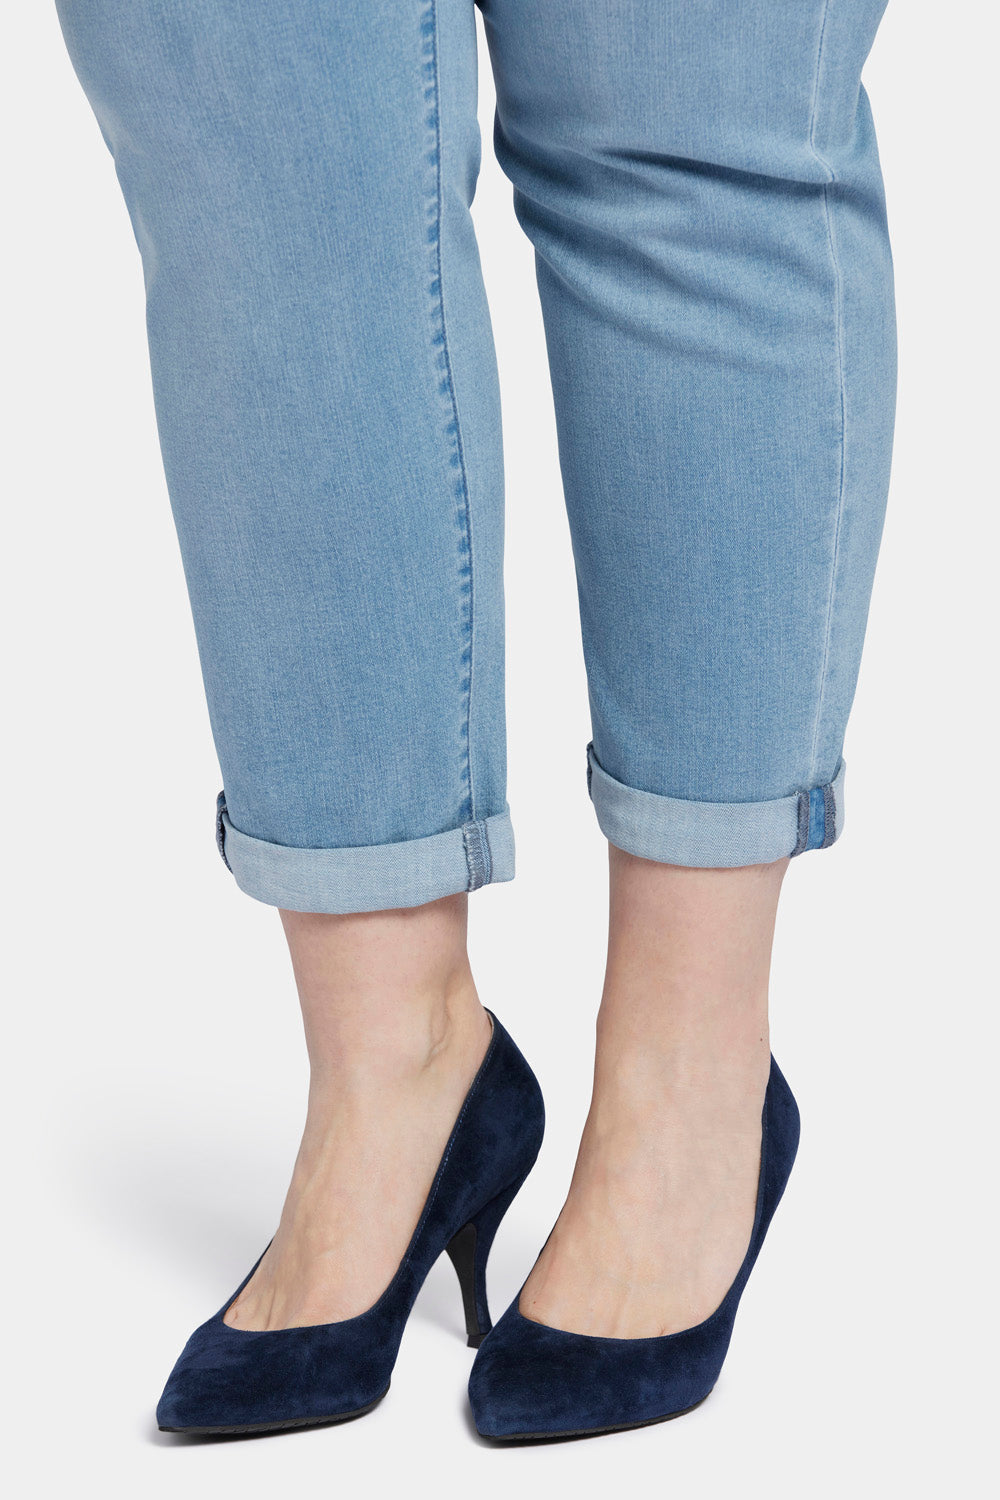 NYDJ Margot Girlfriend Jeans In Petite Plus Size In Cool Embrace® Denim With Cuffs - Kingston